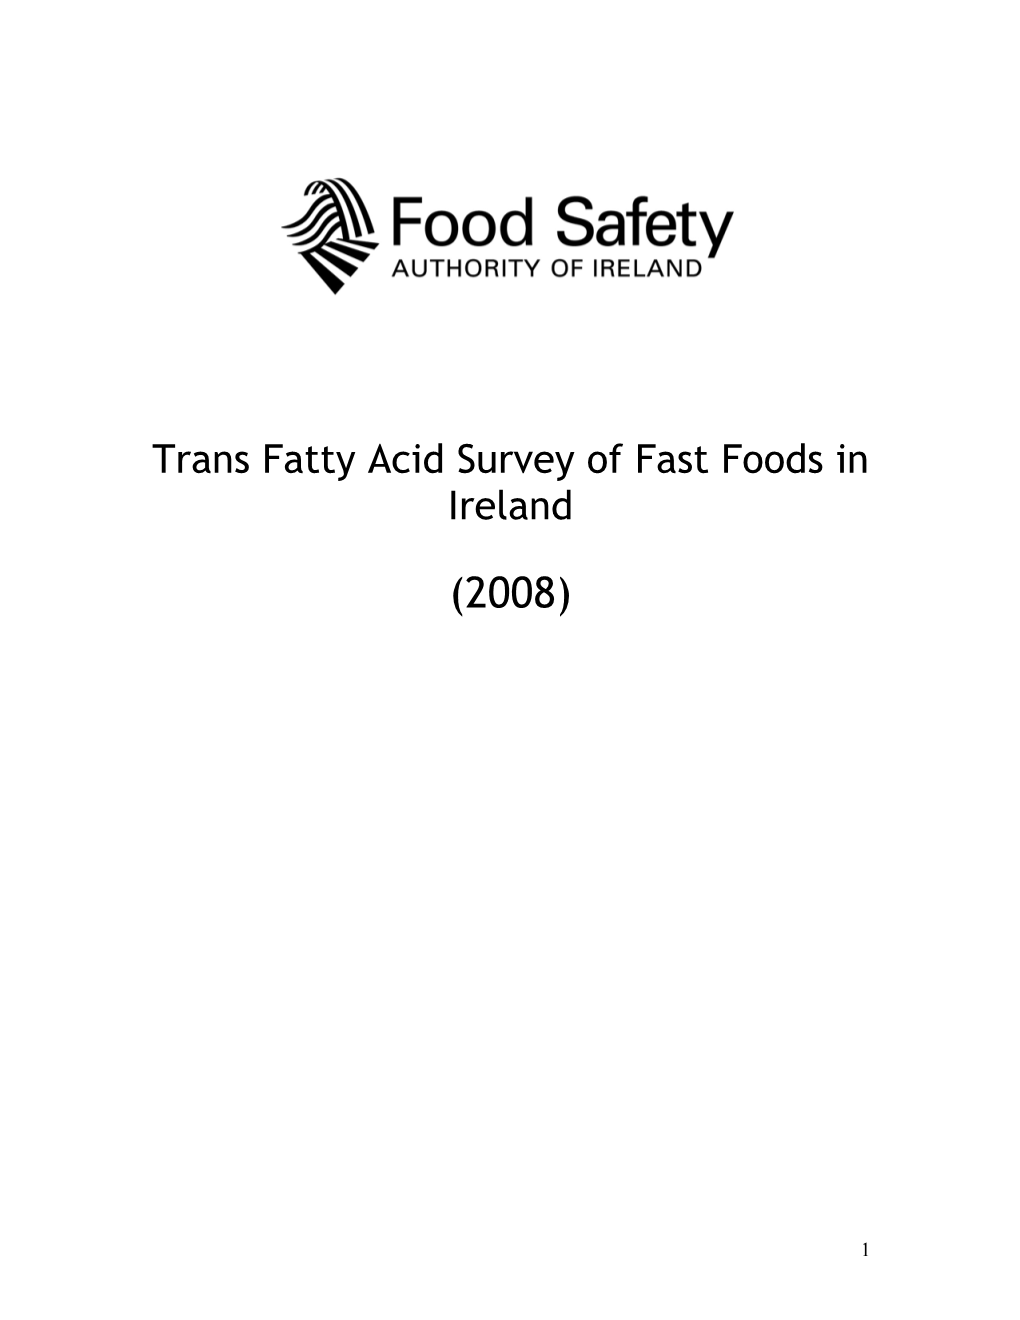 Copy of Trans Fats Fast Foods Survey